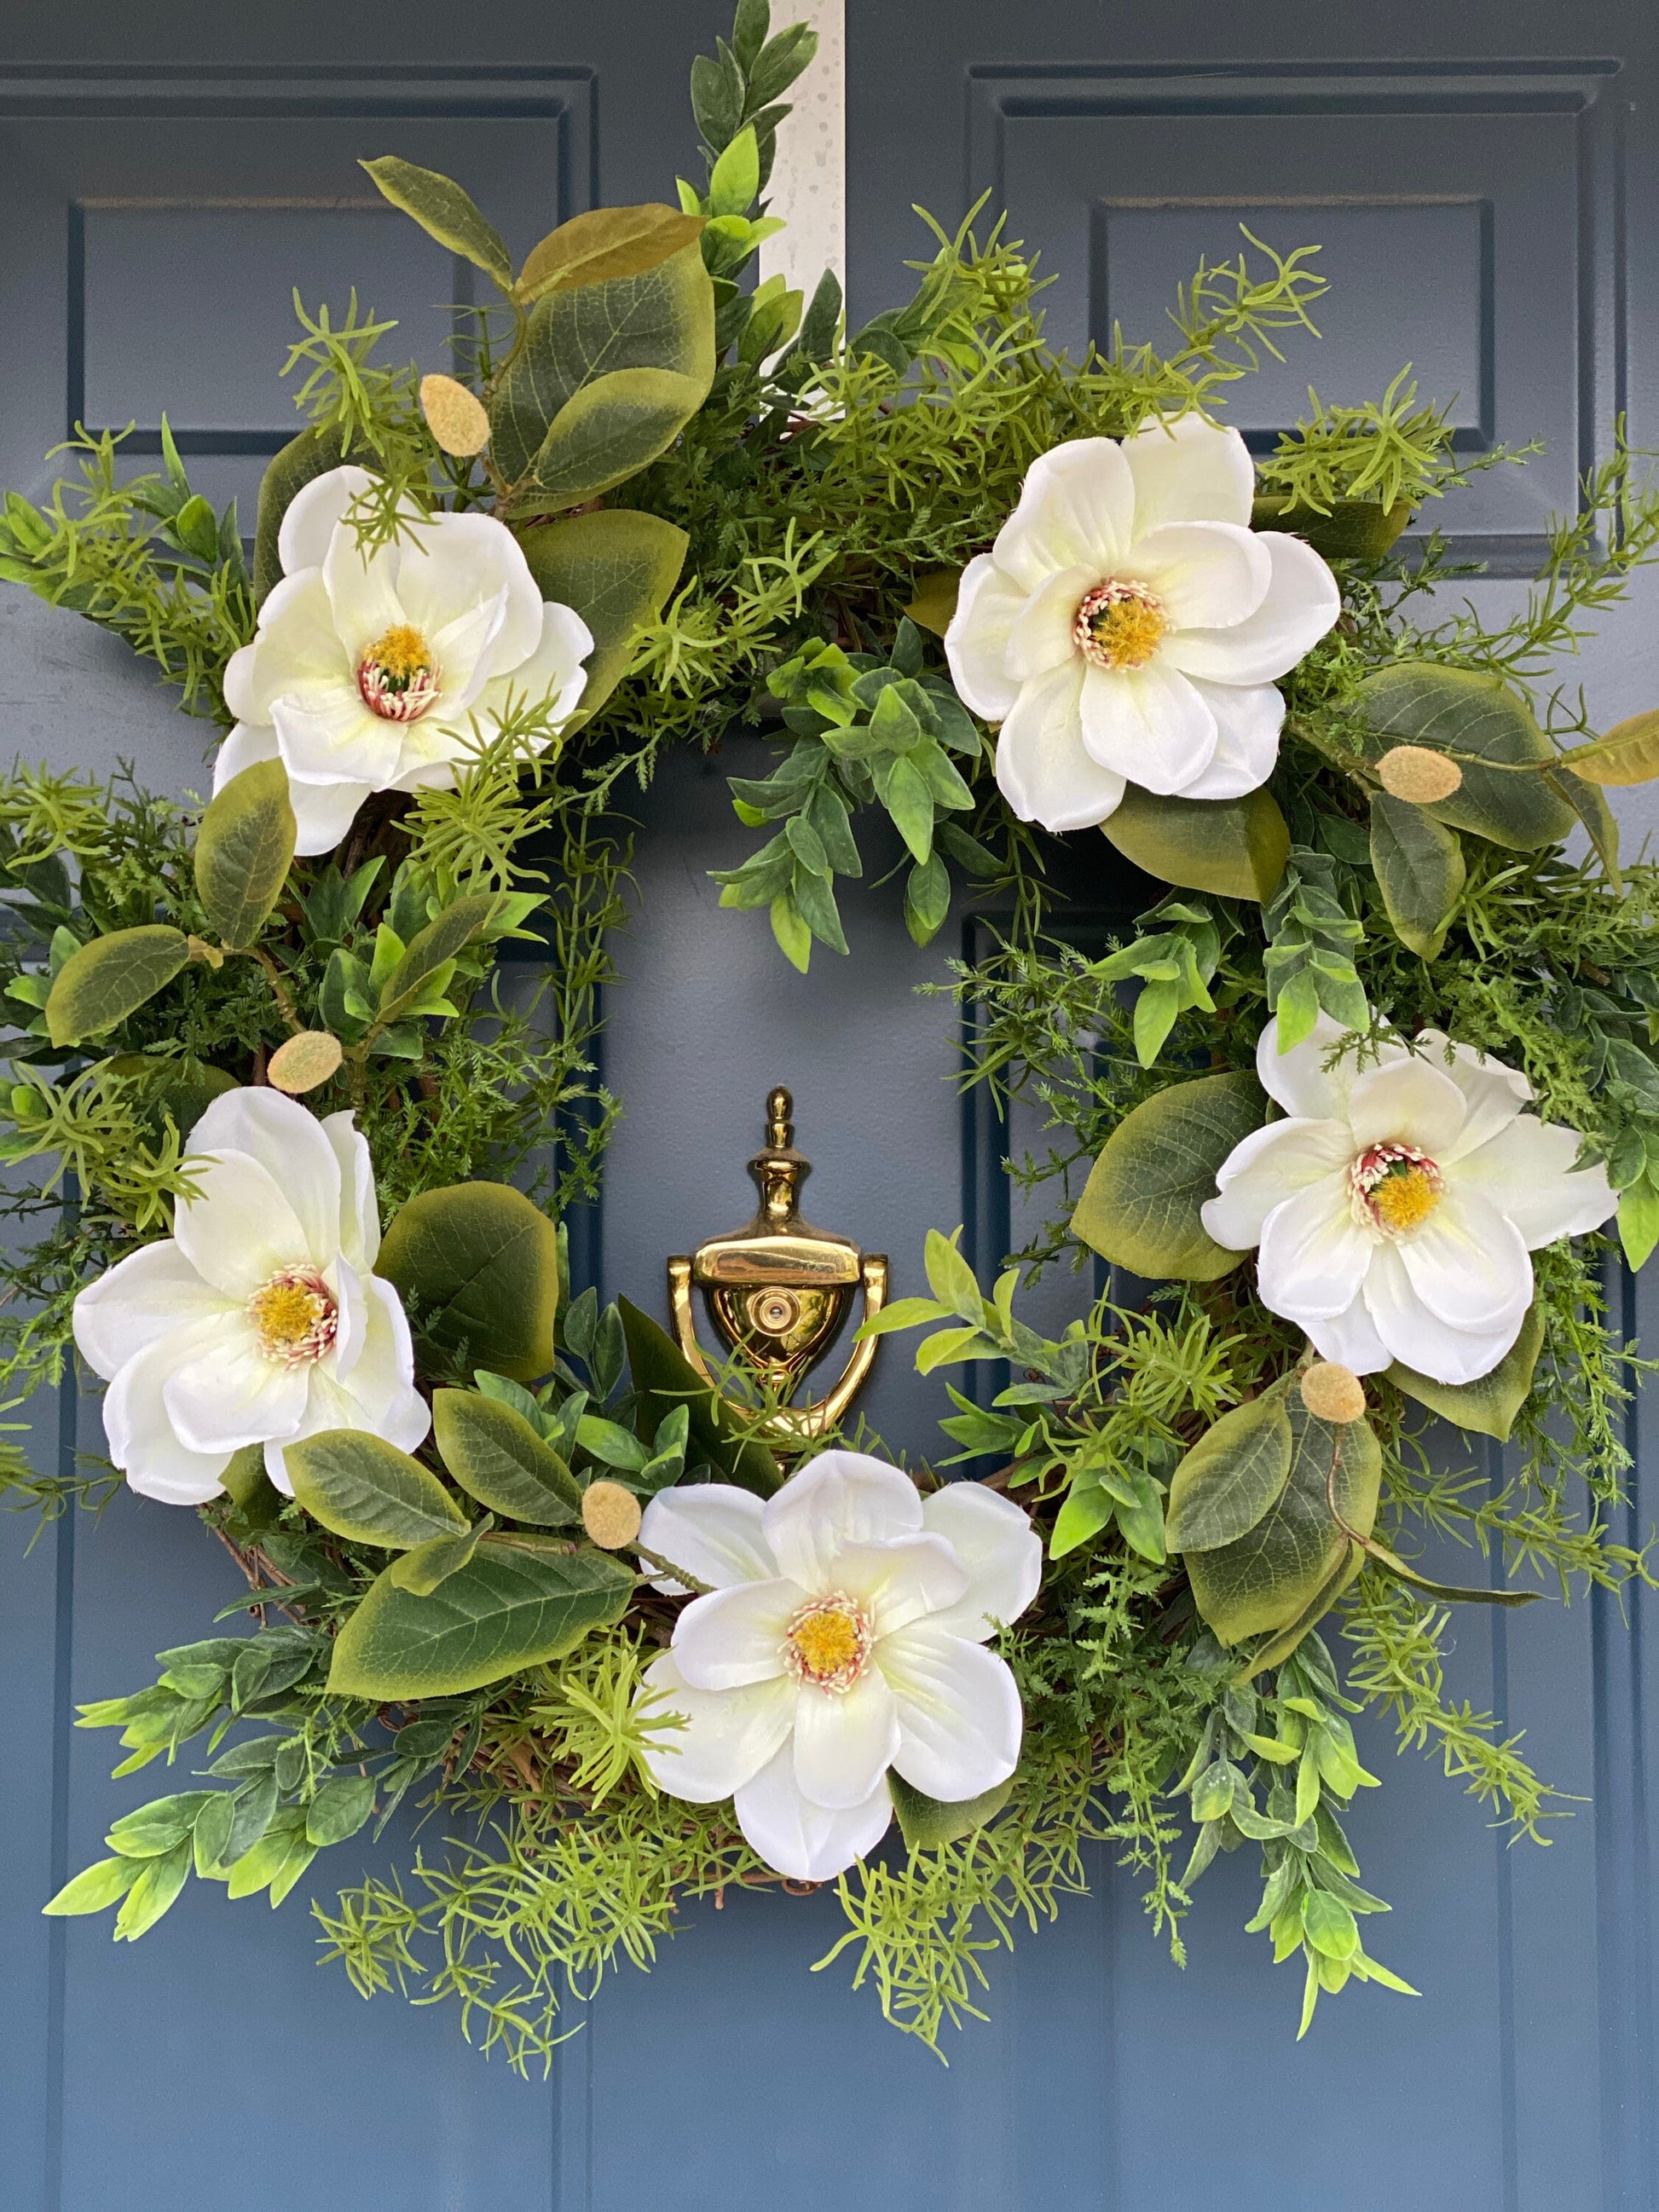 Magnolia year round wreath for front door, everyday floral wreath, minimalist door decor, Spring Magnolia farmhouse decoration